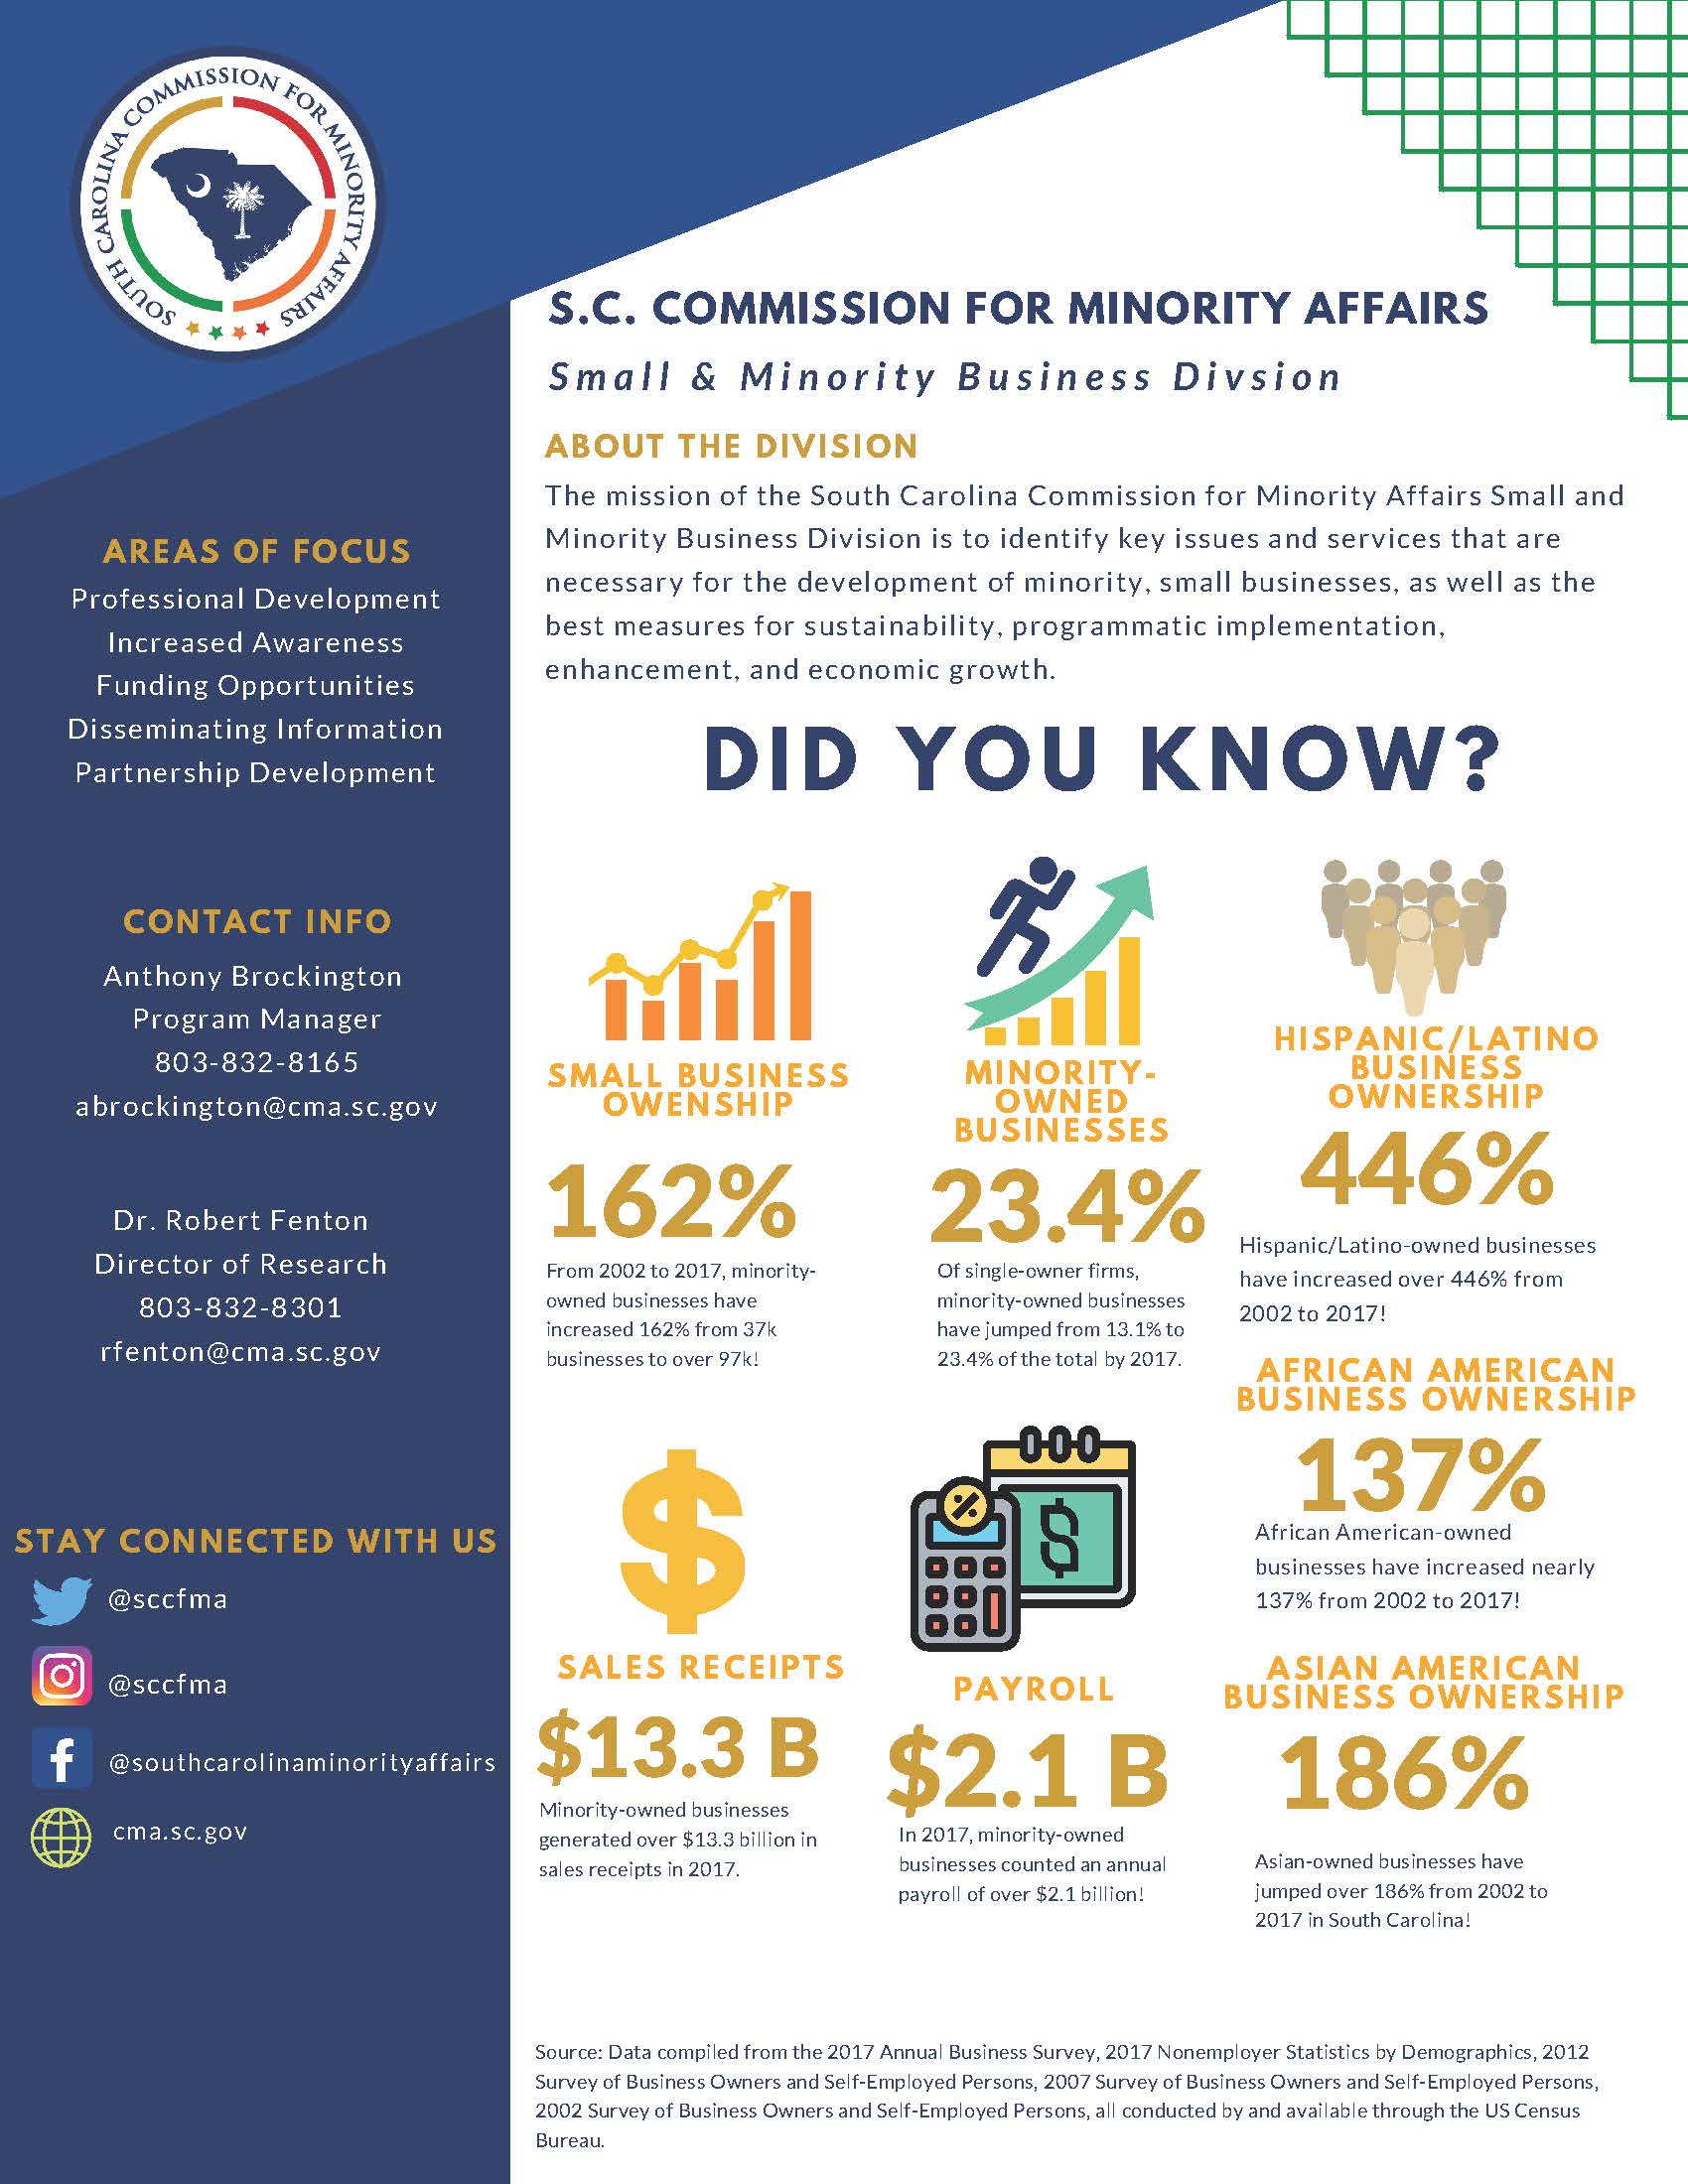 Small and Minority Business Fact Sheet